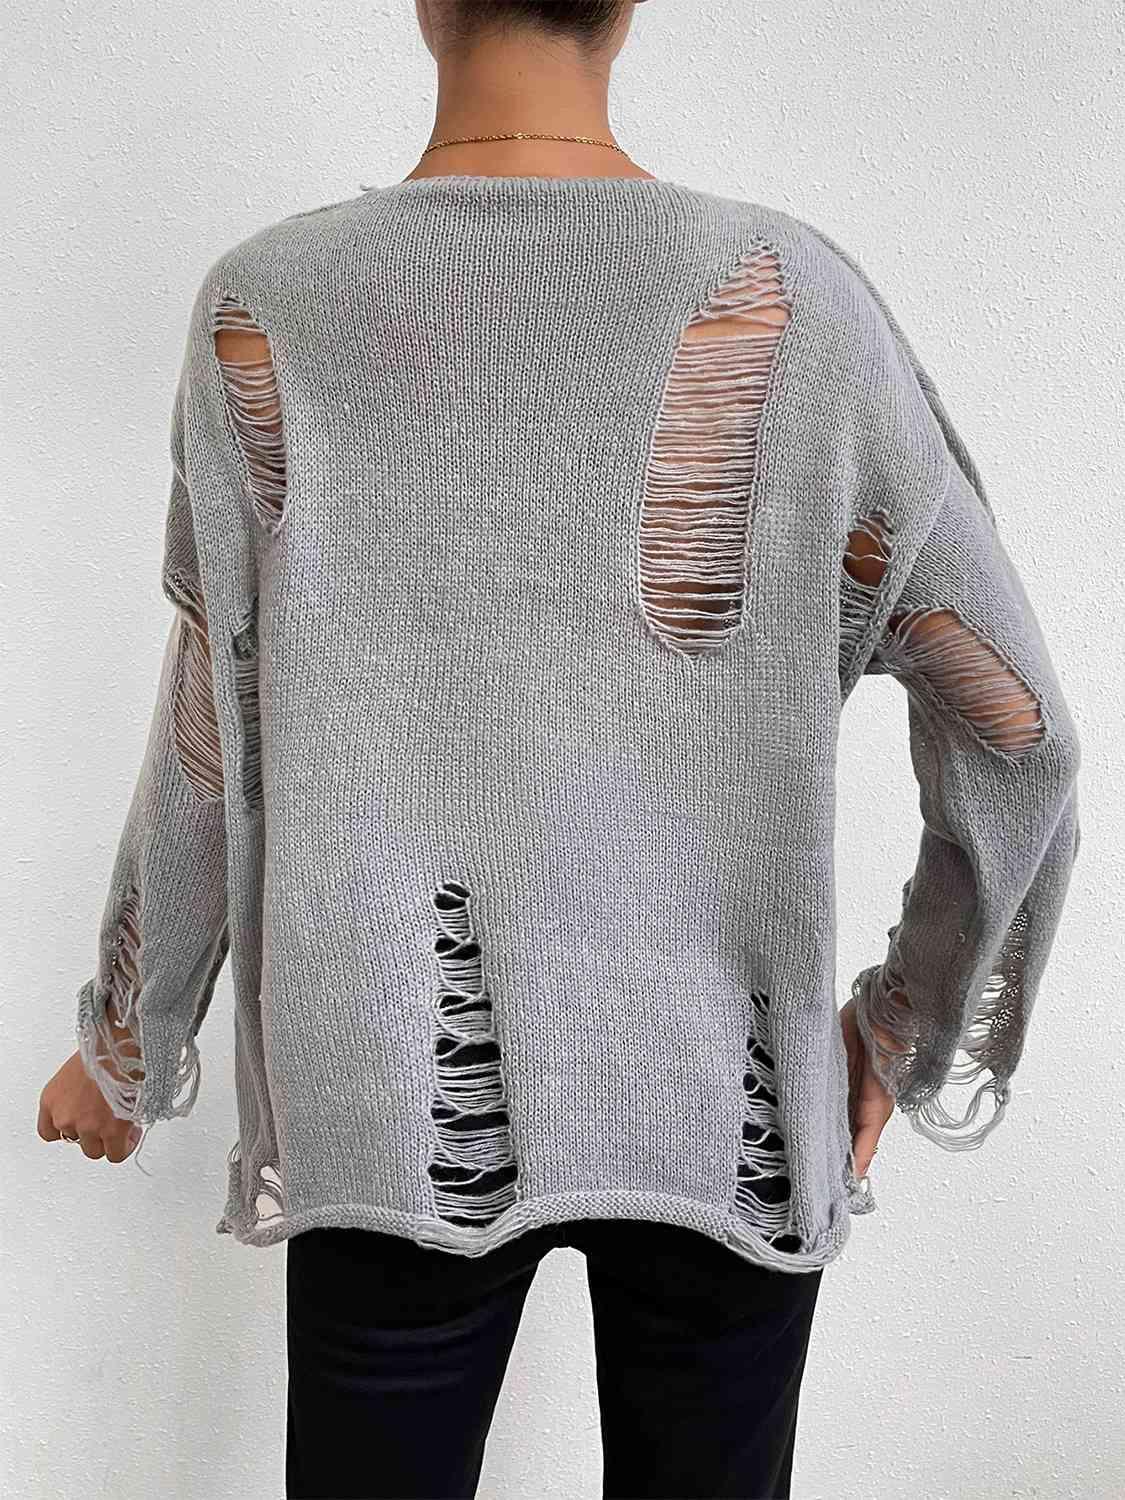 On Trend Crew Neck Distressed Knit Sweater-MXSTUDIO.COM